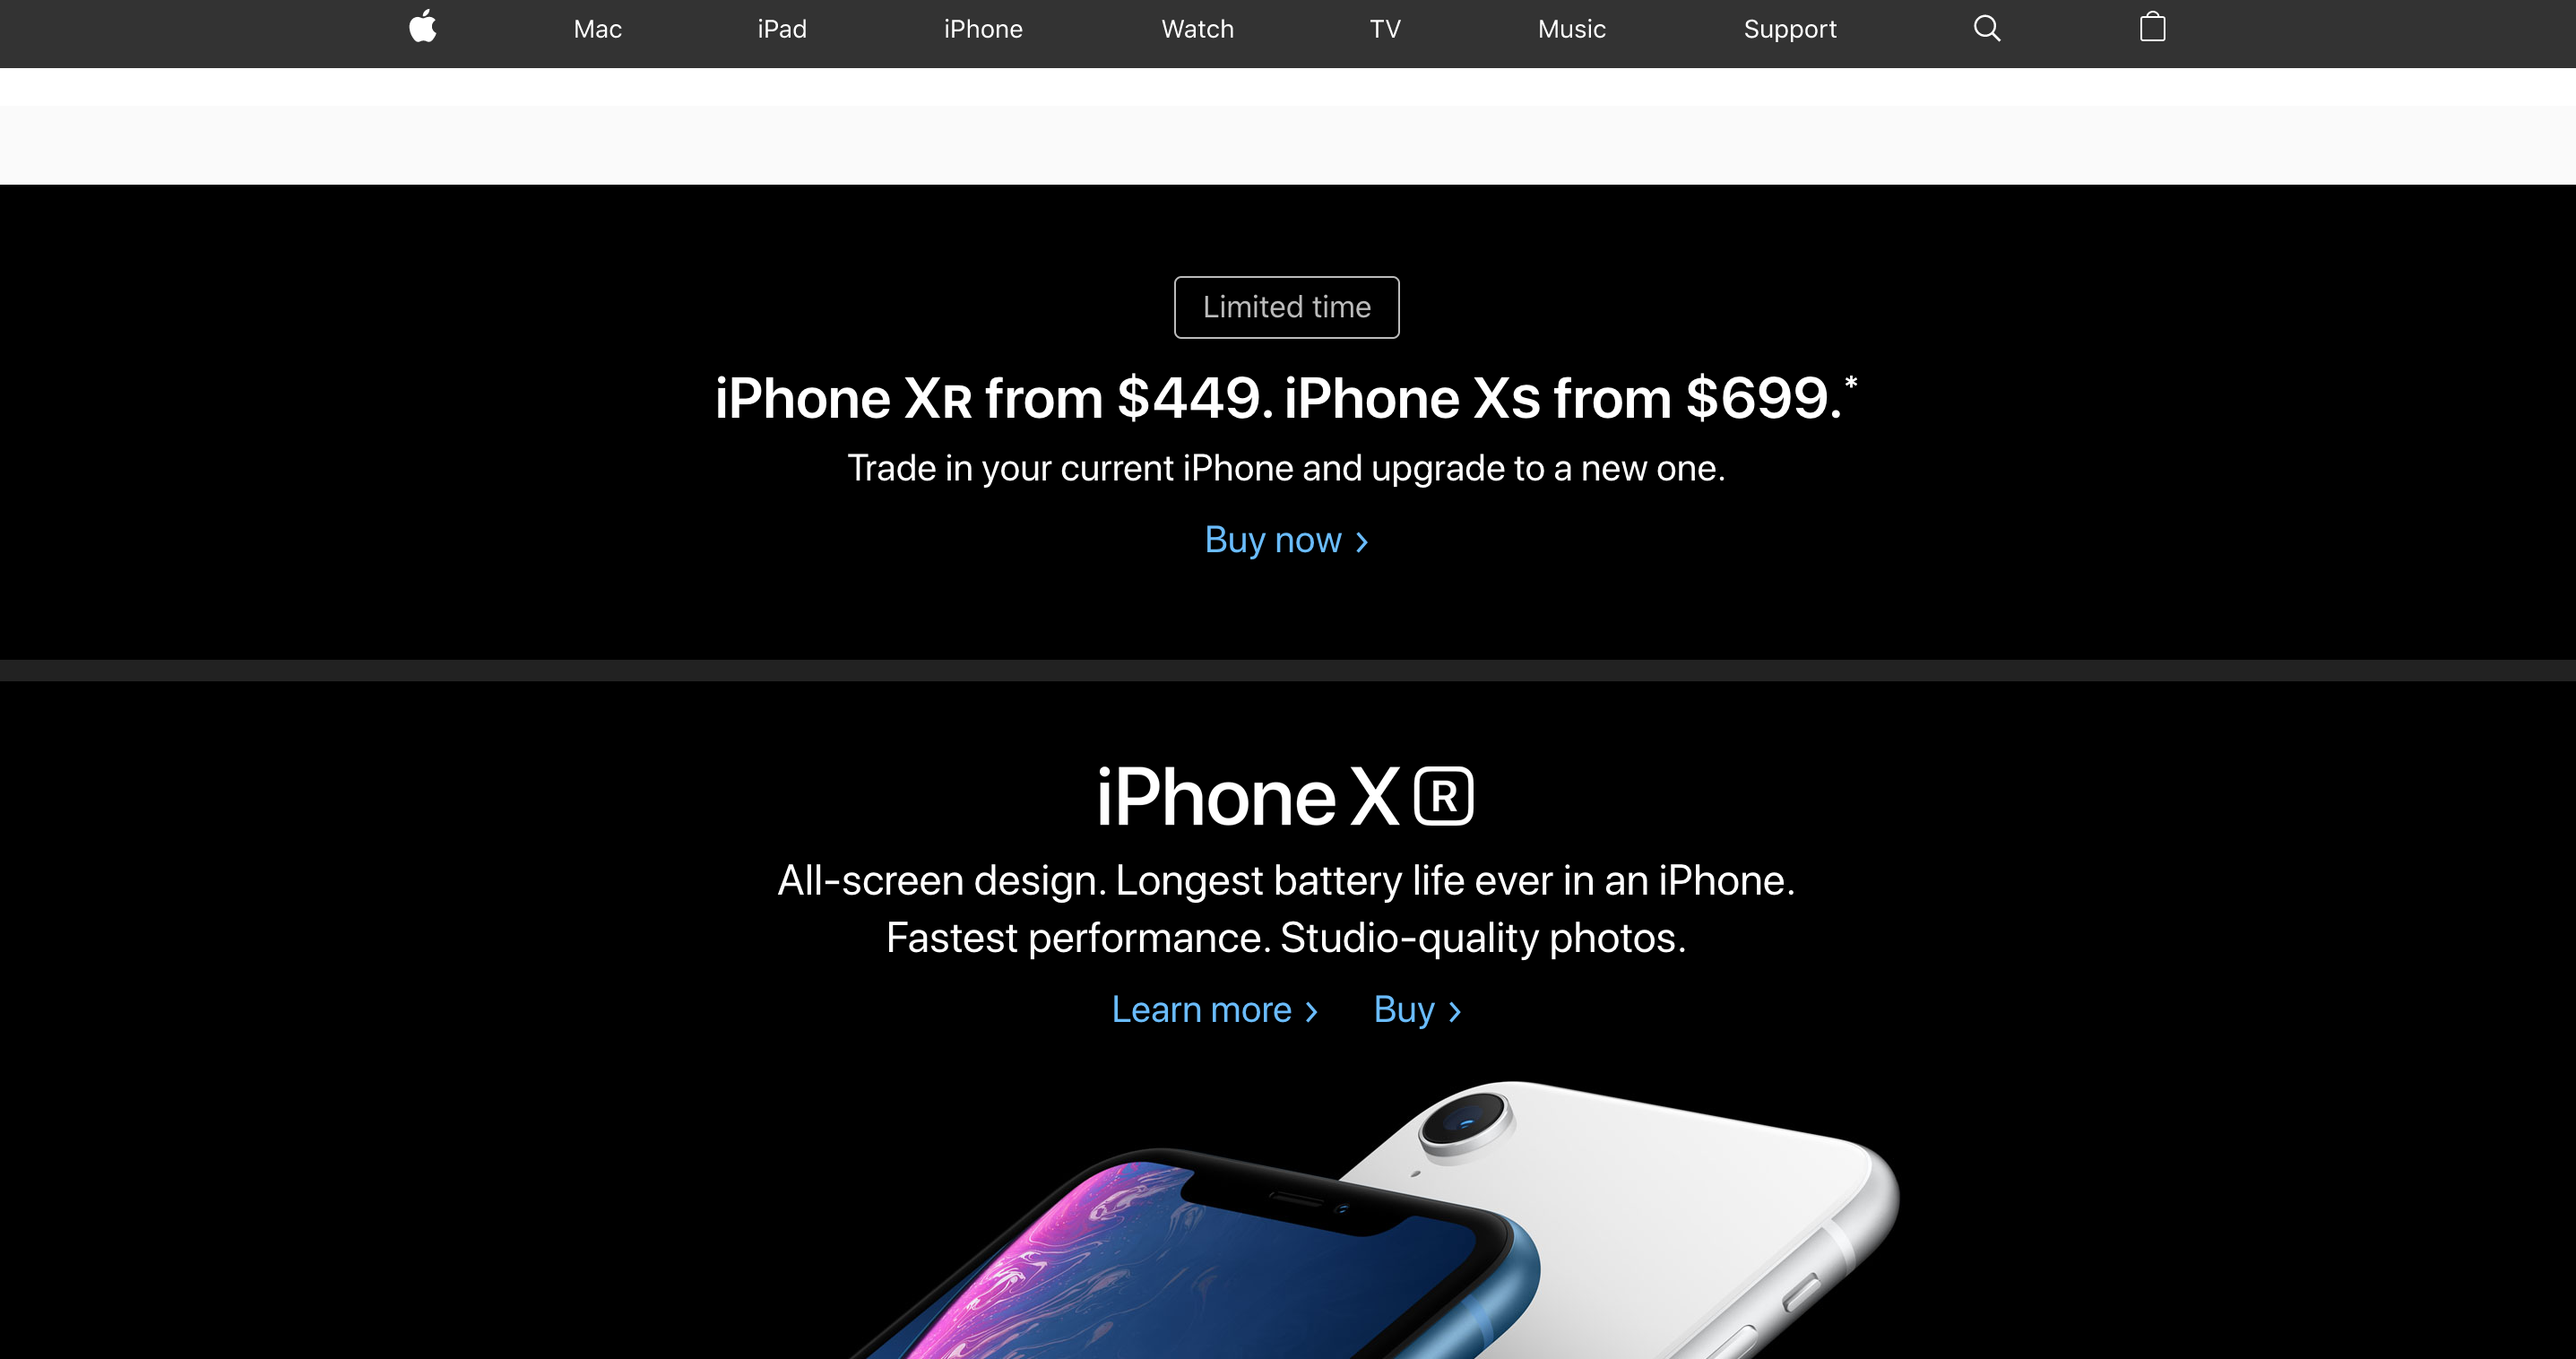 apple.com Website Design in 2019